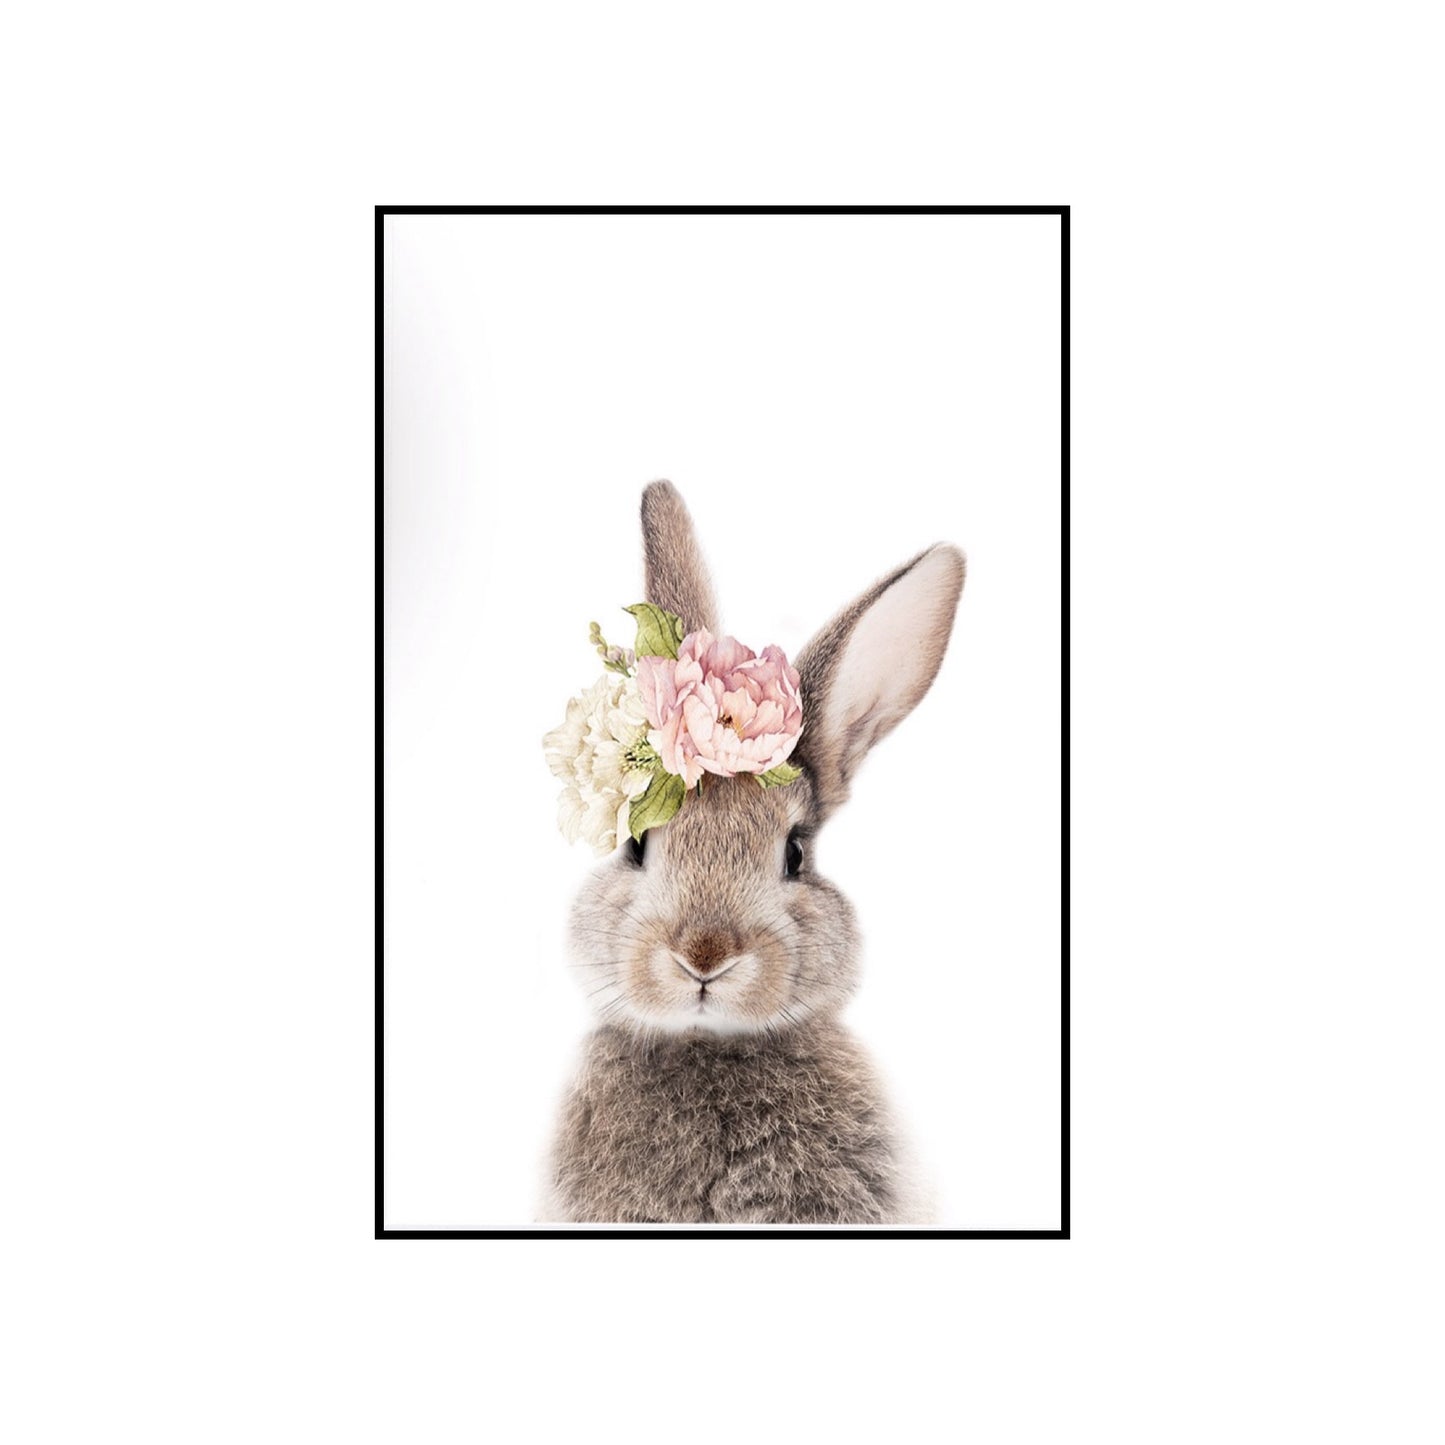 Flower bunny - THE WALL STYLIST